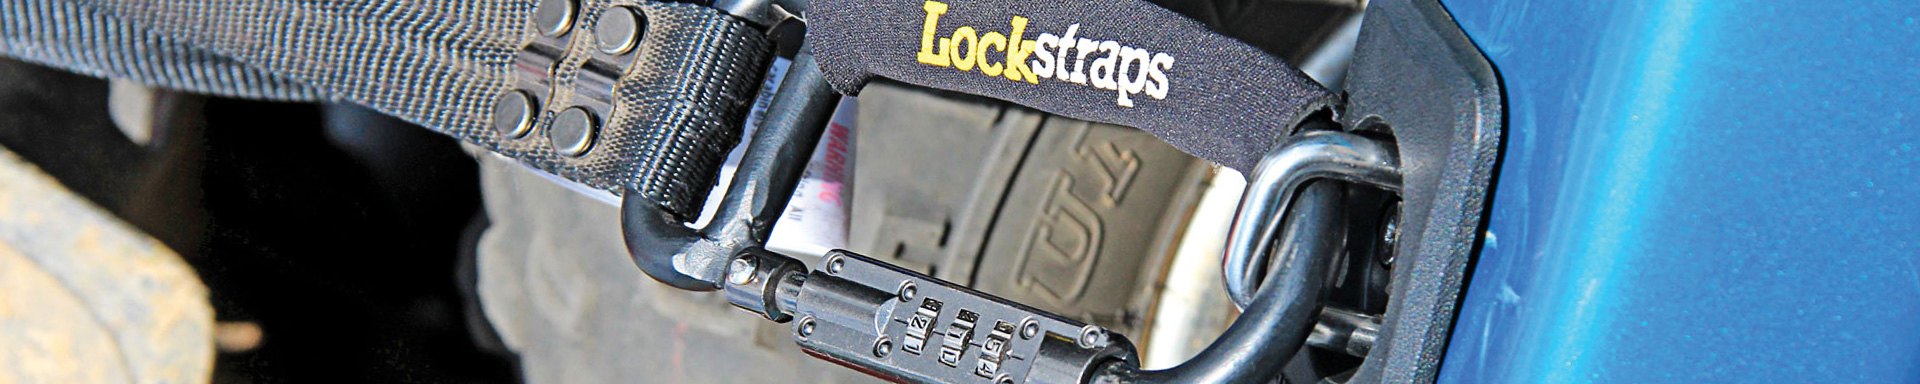 Lockstraps